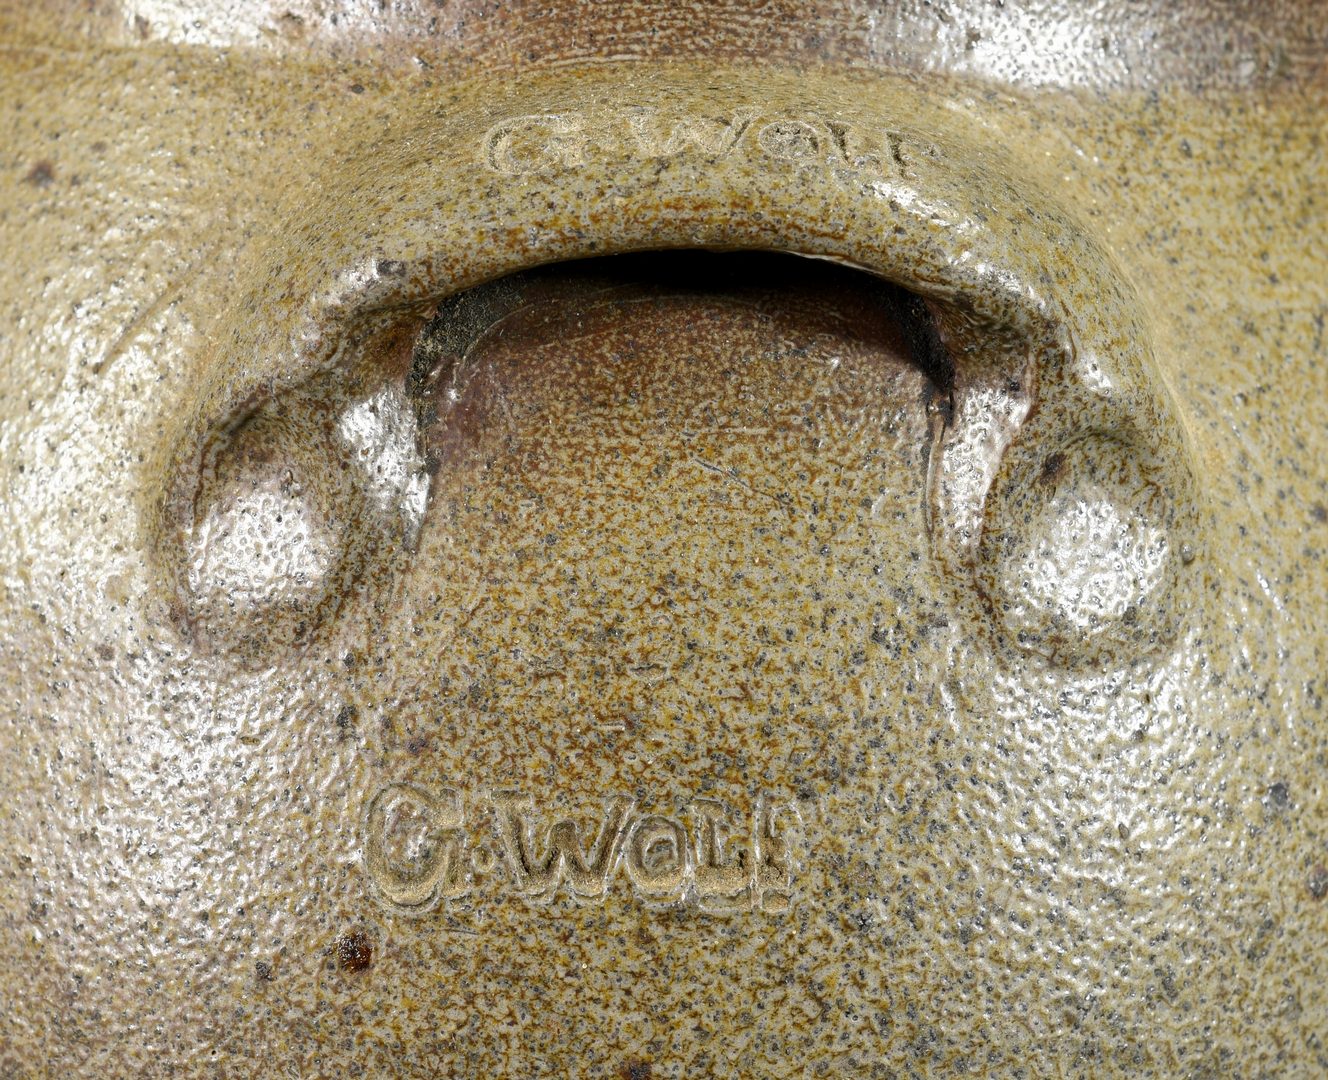 Lot 138: 19th C. NC  Stoneware Jar, signed G. Wolf